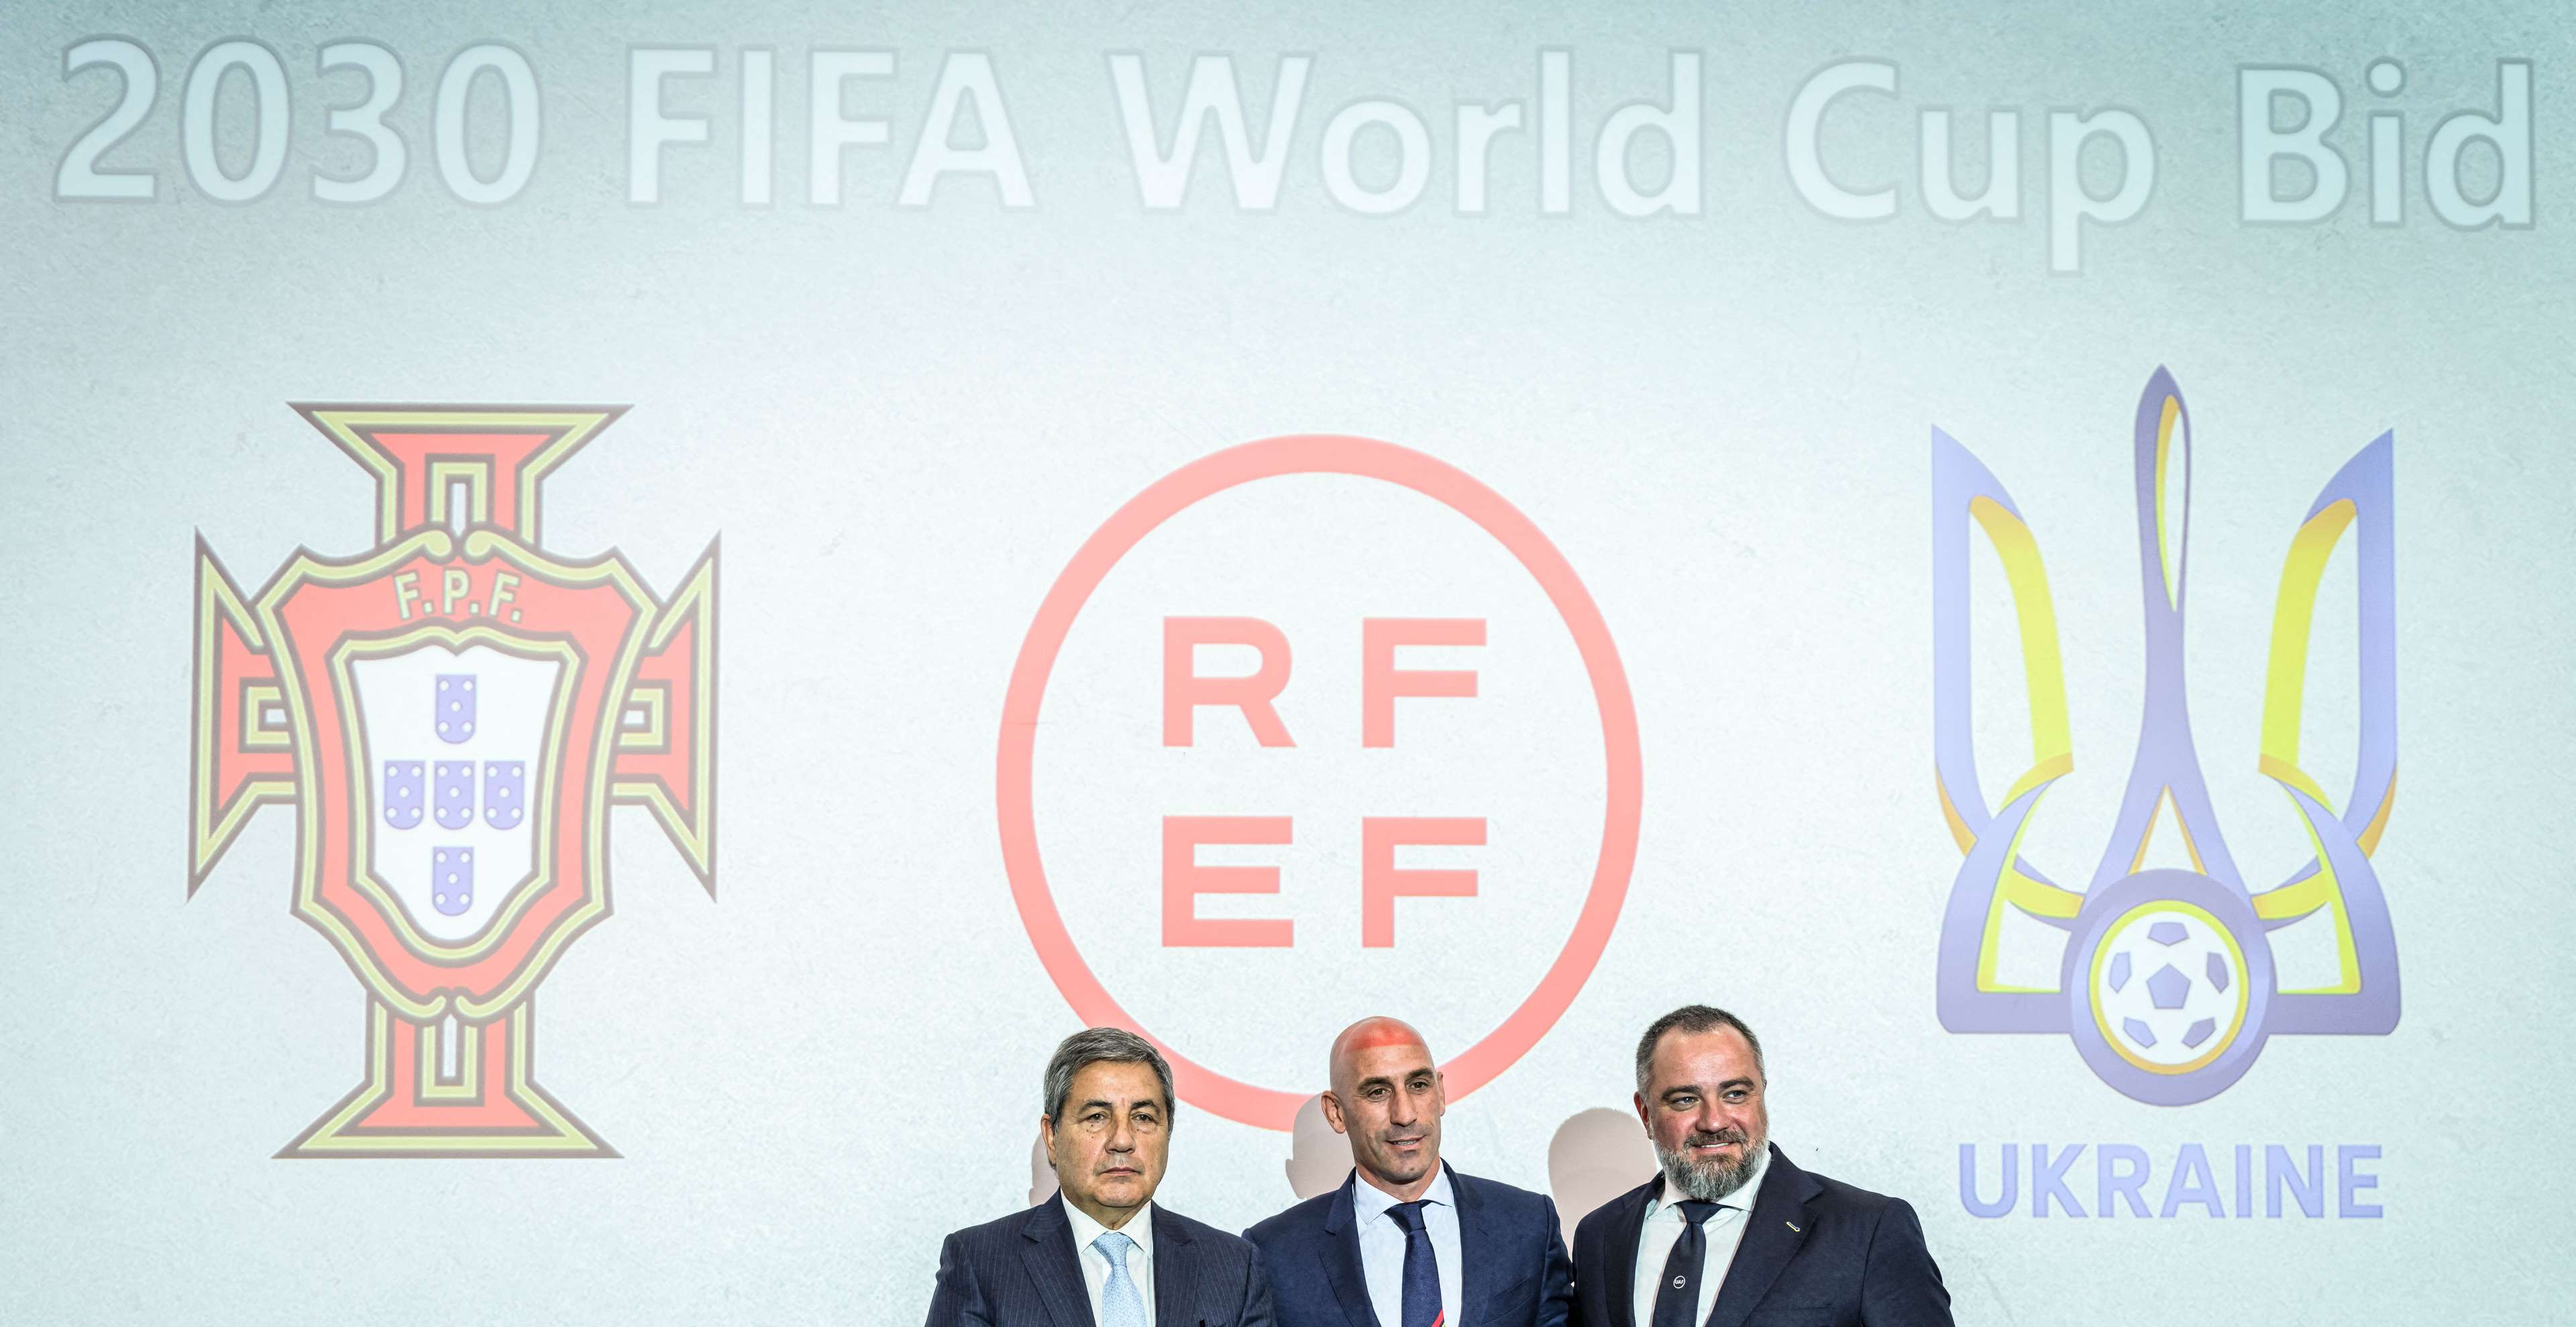 Portugal-Spain-Ukraine WC bid